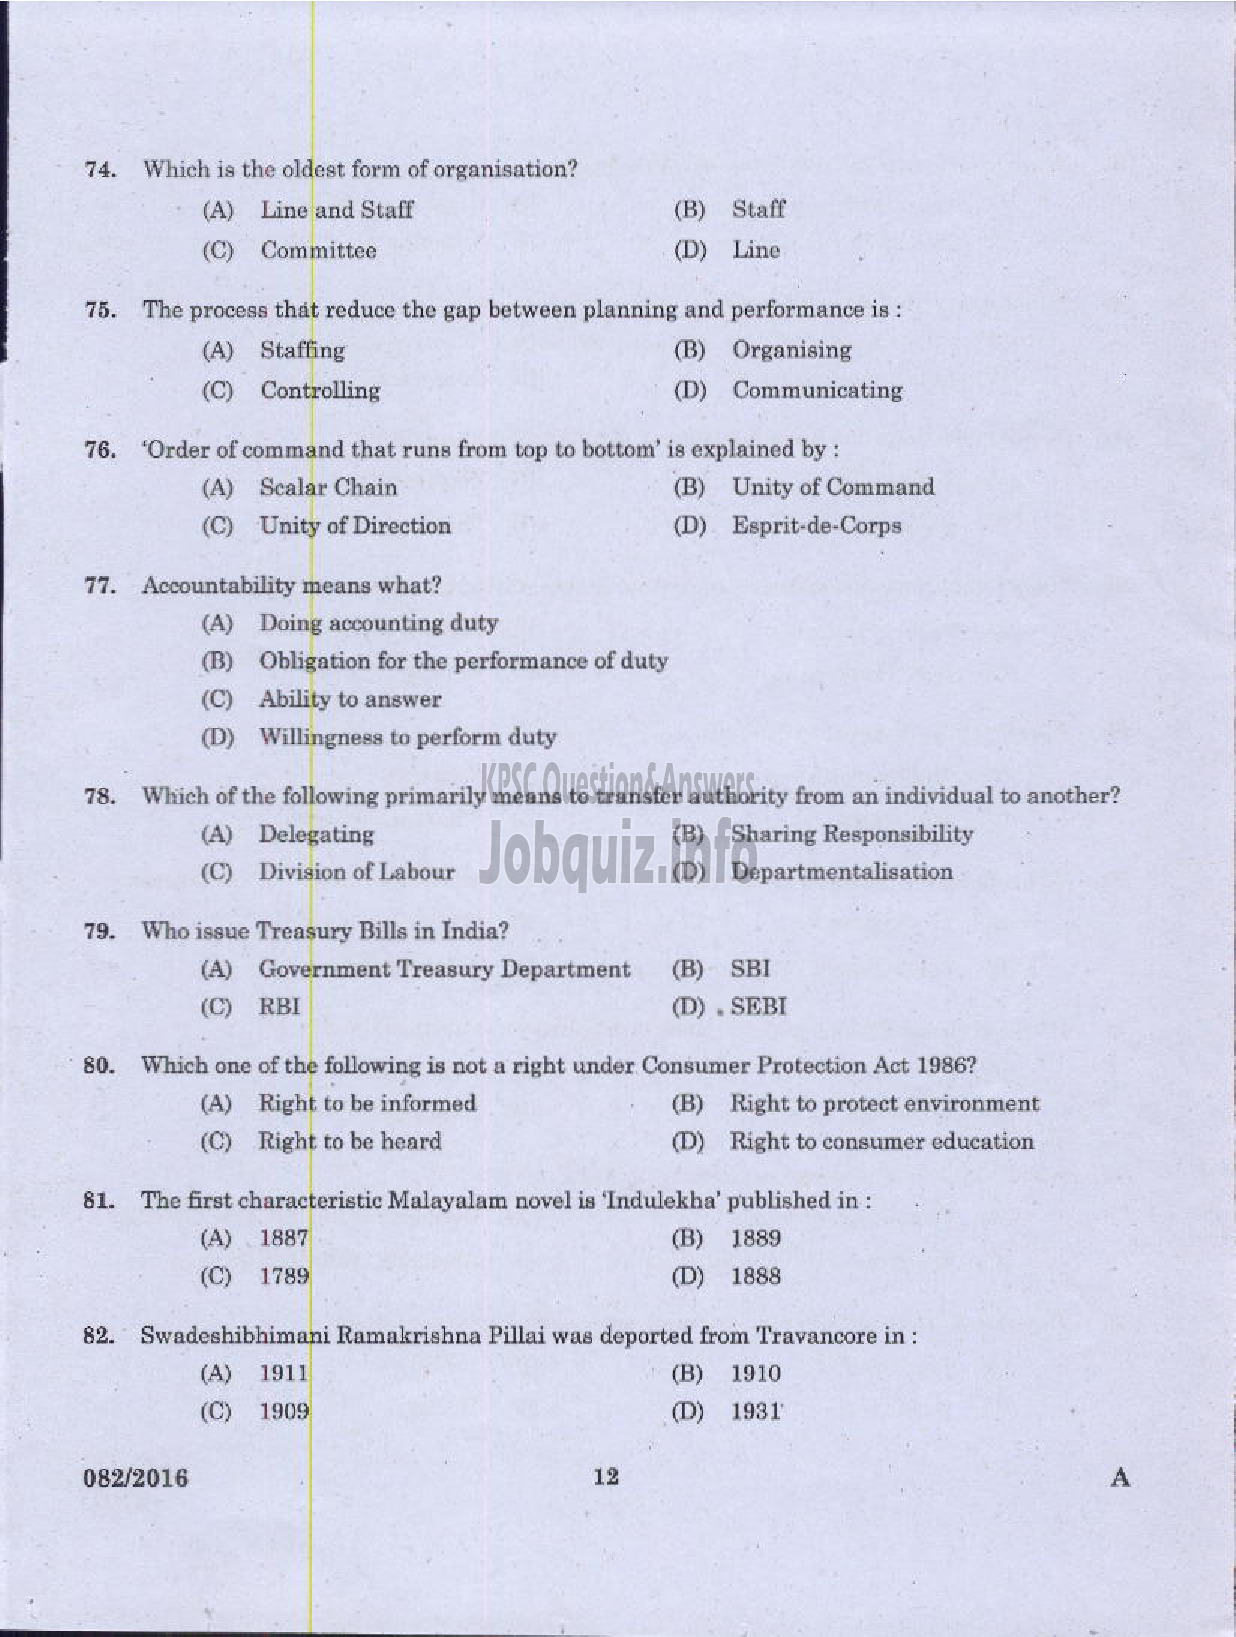 Kerala PSC Question Paper - ACCOUNTANT /JUNIOR ACCOUNTANT /ACCOUNTS ASSISTANT VARIOUS COMPANIES/CORPNS/BOARDS/SOCIETIES-10